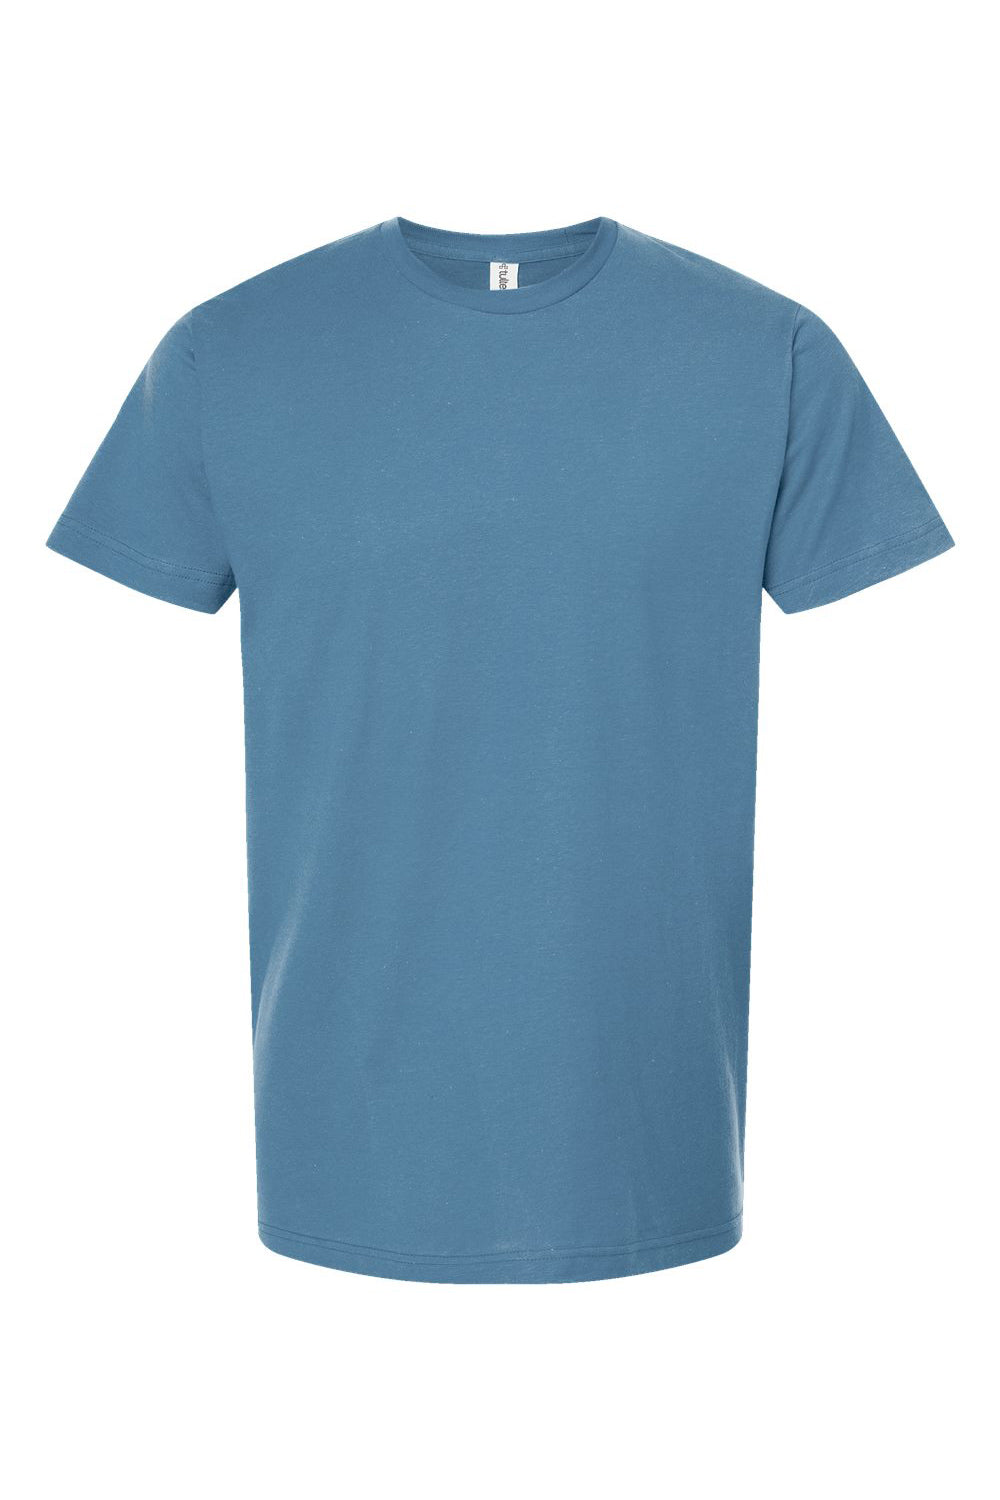 Tultex 202 Mens Fine Jersey Short Sleeve Crewneck T-Shirt Slate Blue Flat Front